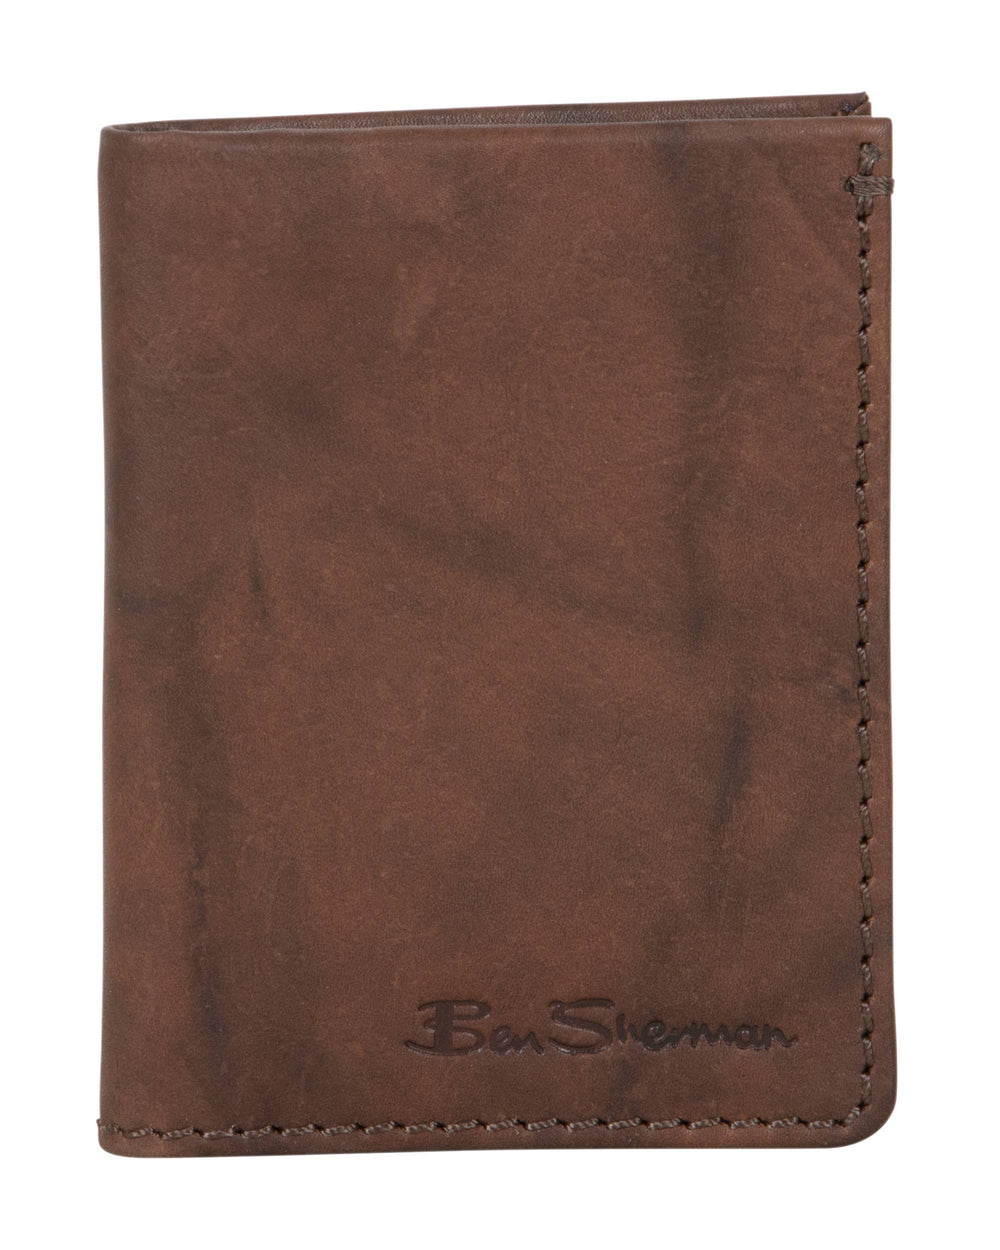 Manchester Marble Crunch Leather Slim Bifold Wallet - Brown